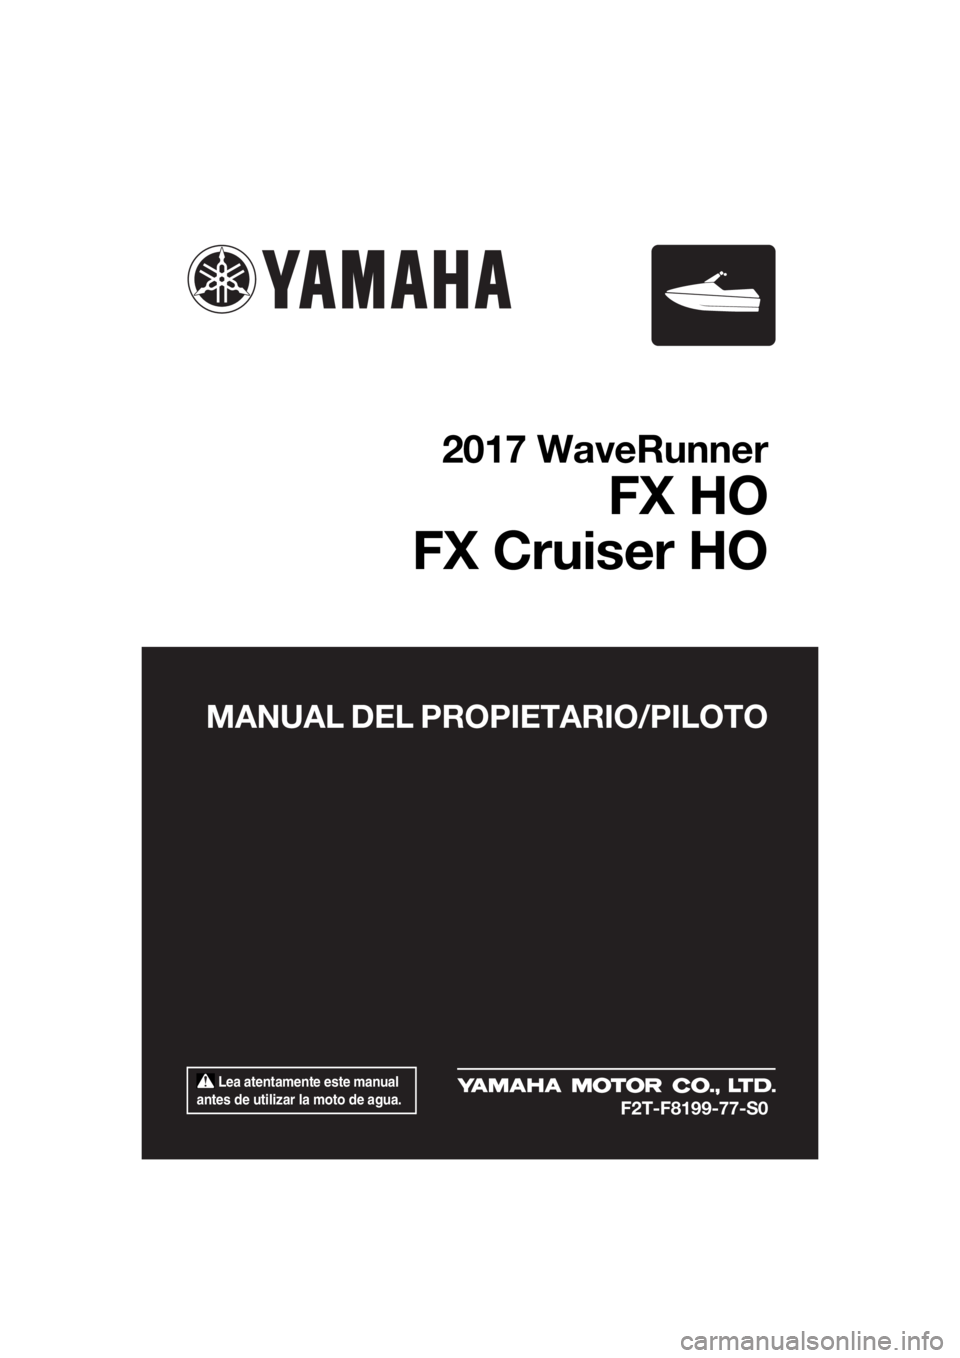 YAMAHA FX HO 2017  Manuale de Empleo (in Spanish) 